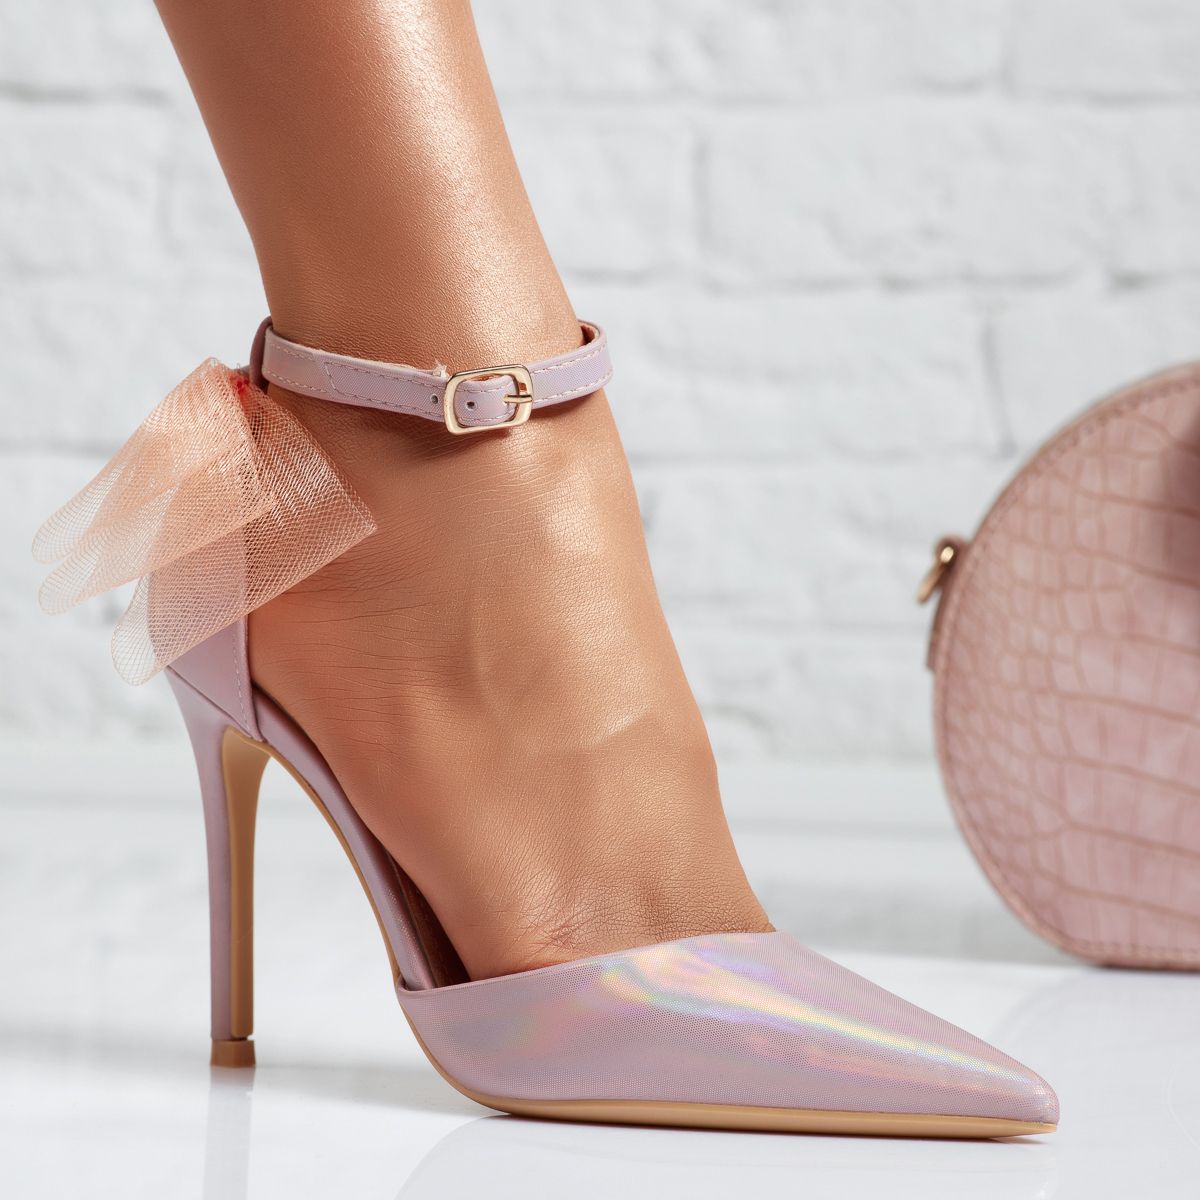 Pantofi Dama cu Toc Tiana Roz/Aurii #14101